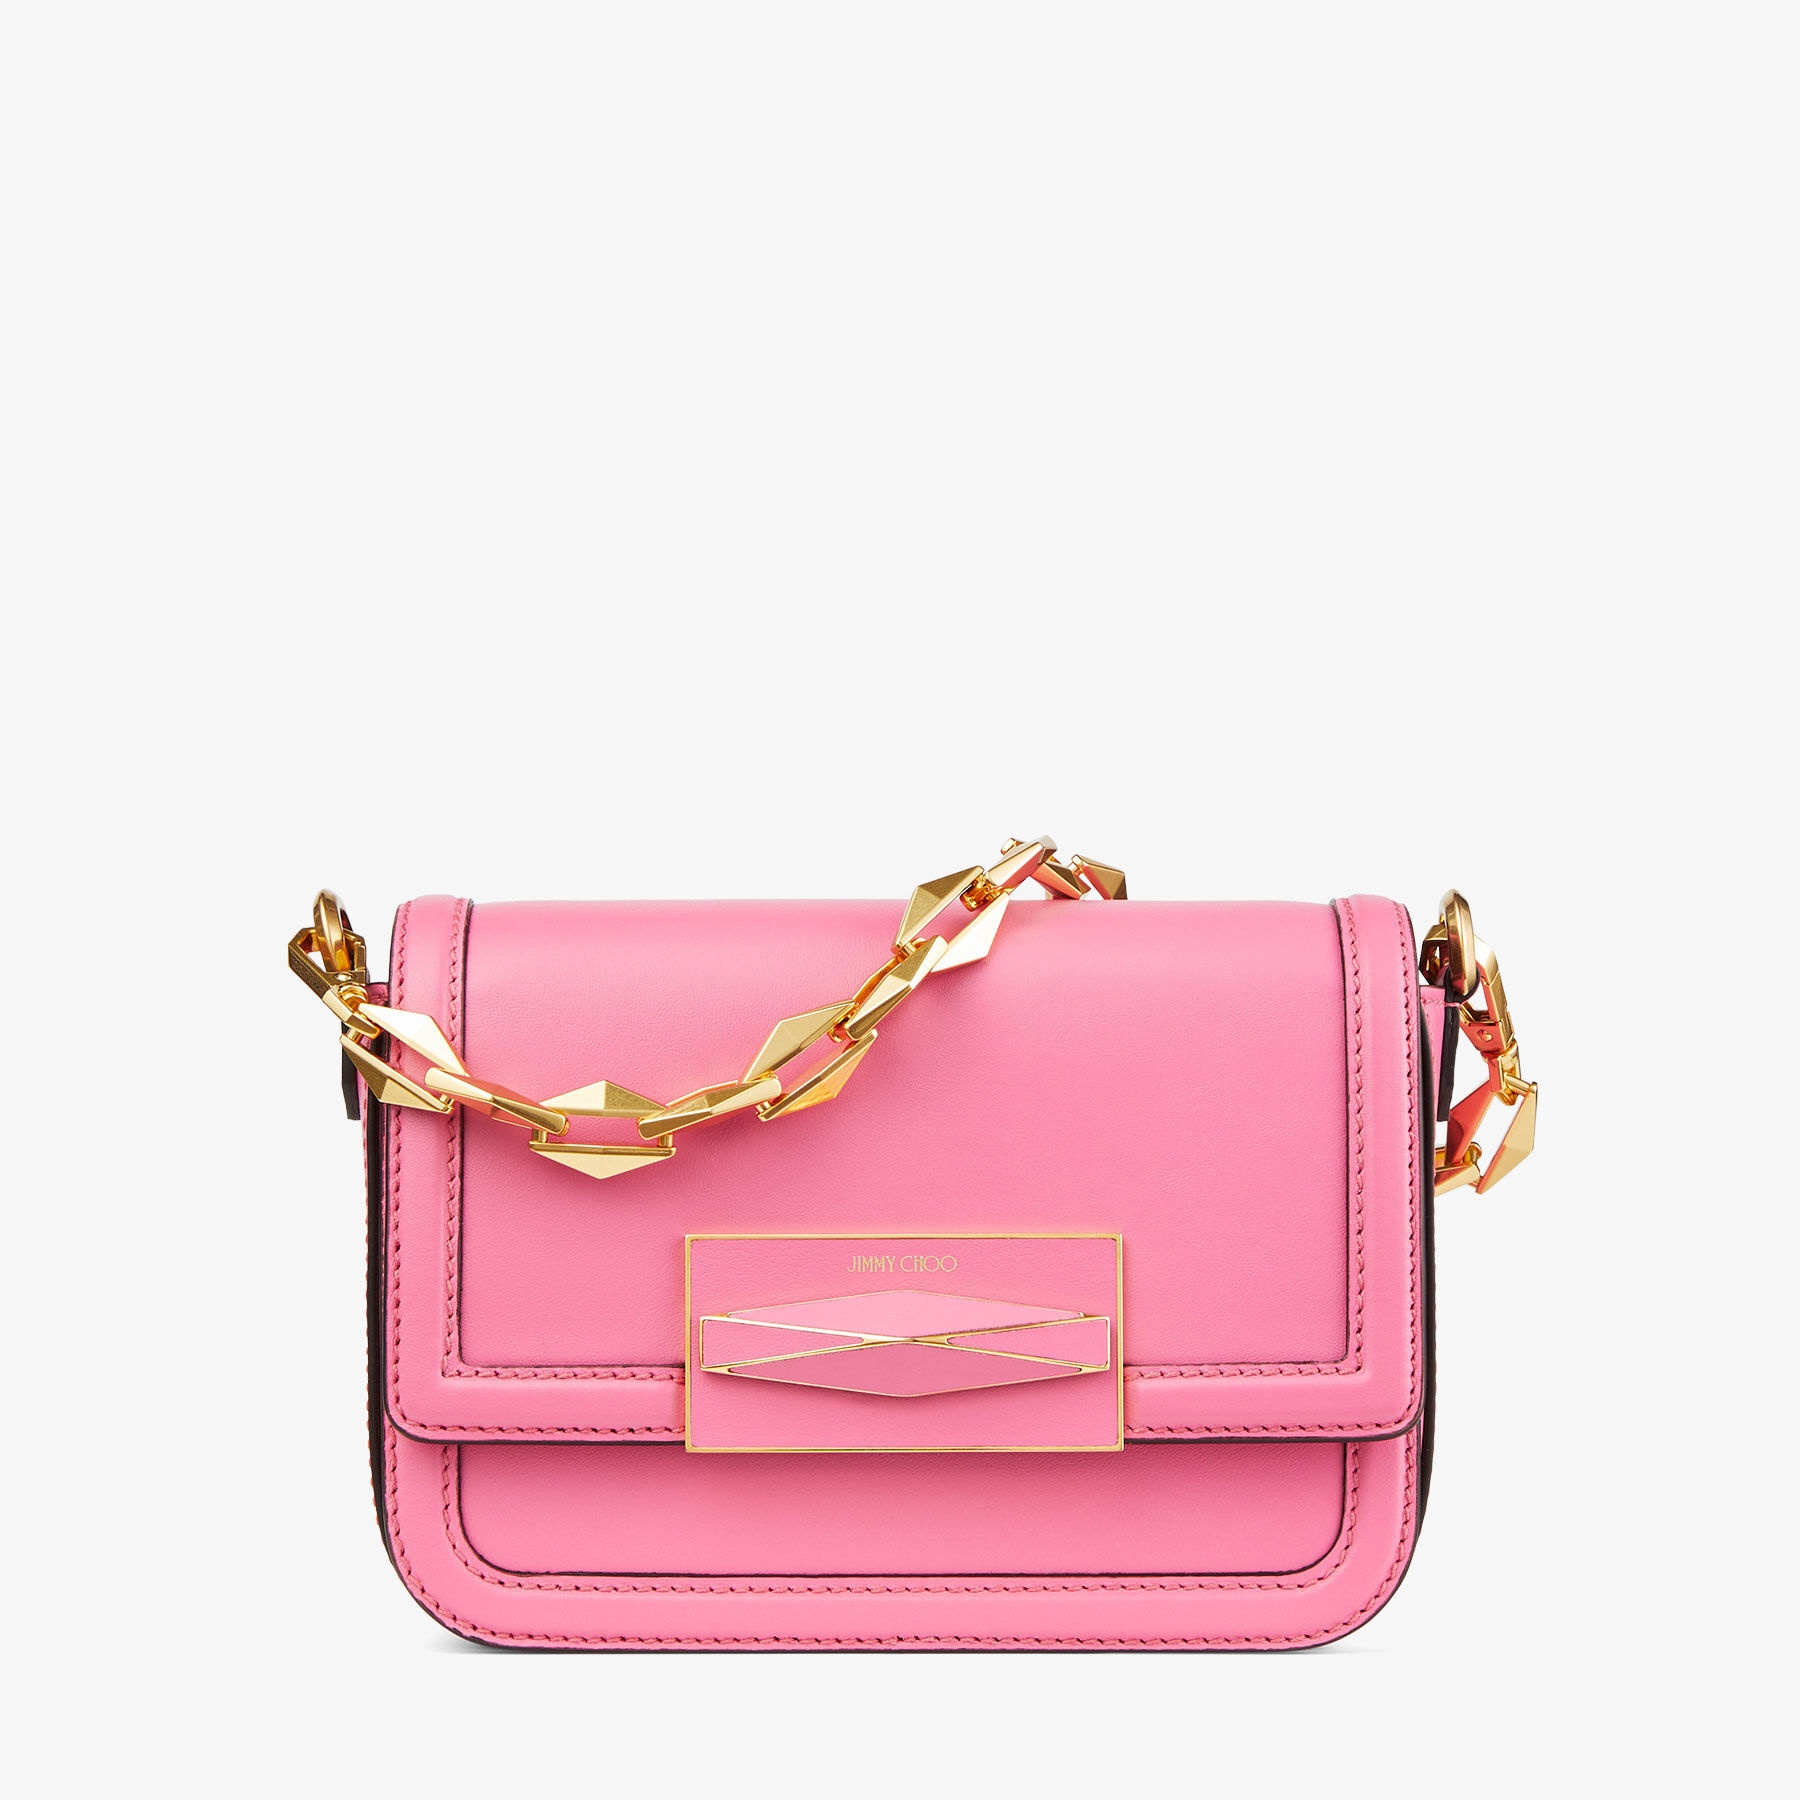 Diamond Crossbody
Candy Pink Smooth Calf Leather Top Handle Bag - 1